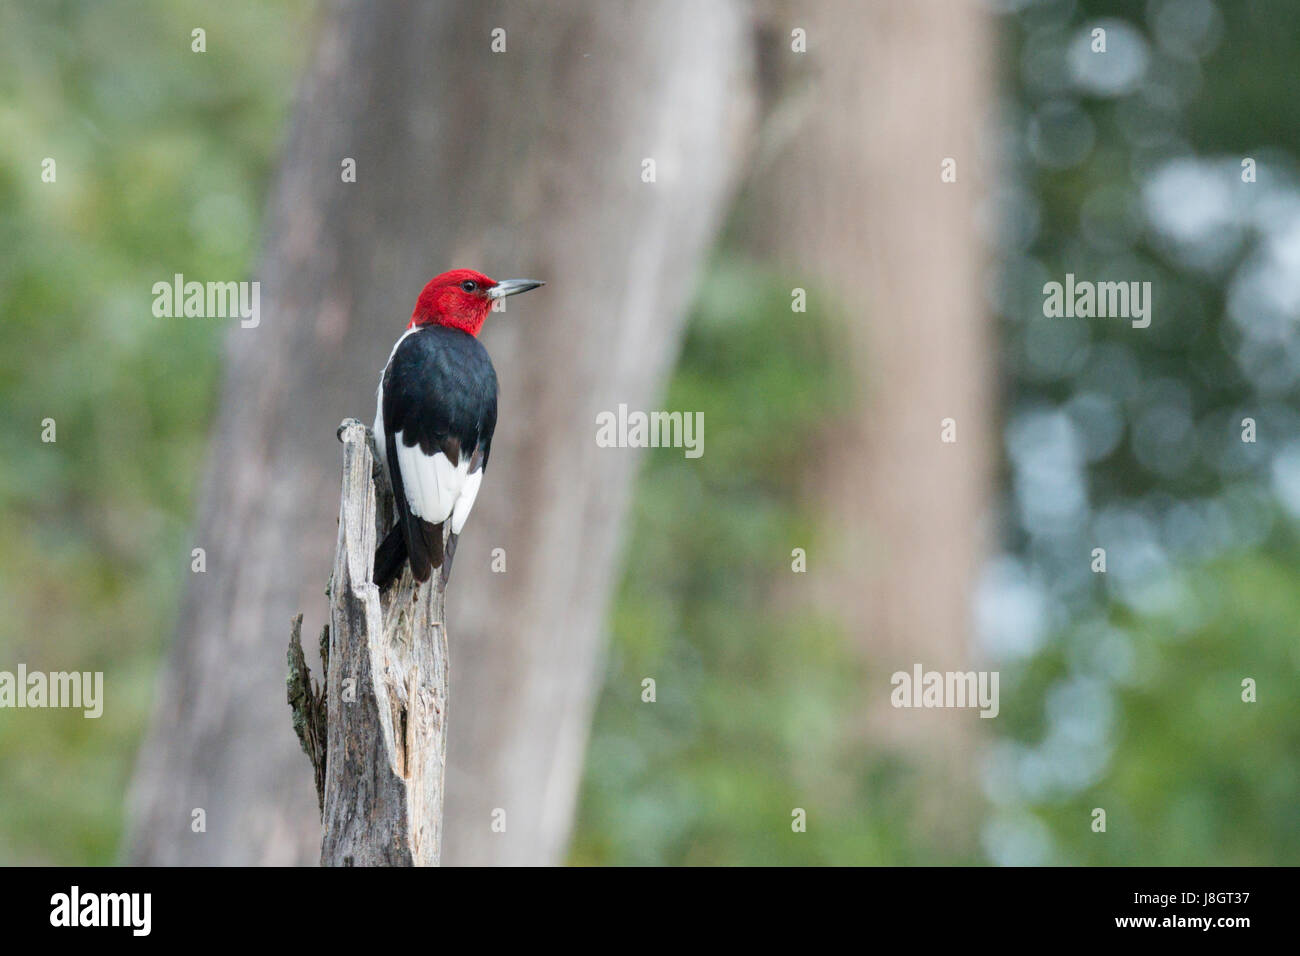 Pájaro carpintero de cabeza roja posa encima de snag árbol Foto de stock